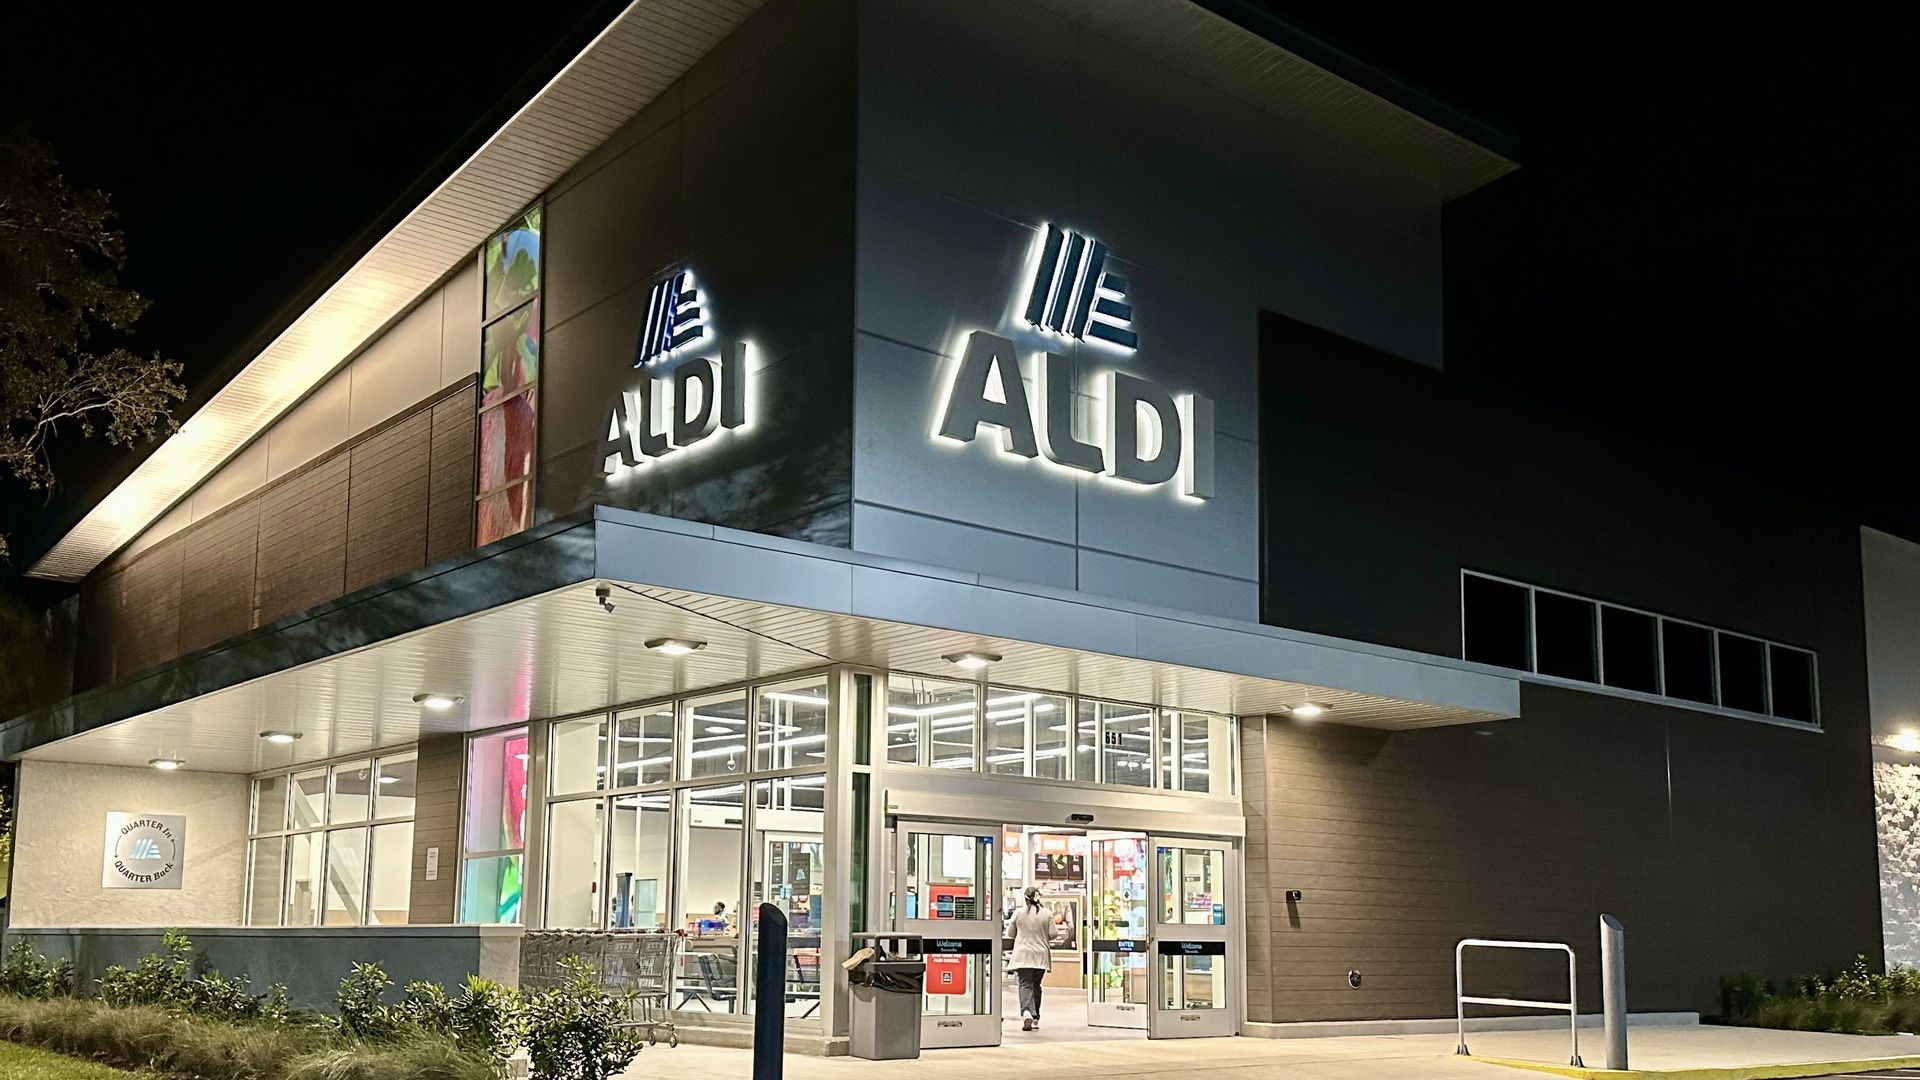 Aldi storefront at night